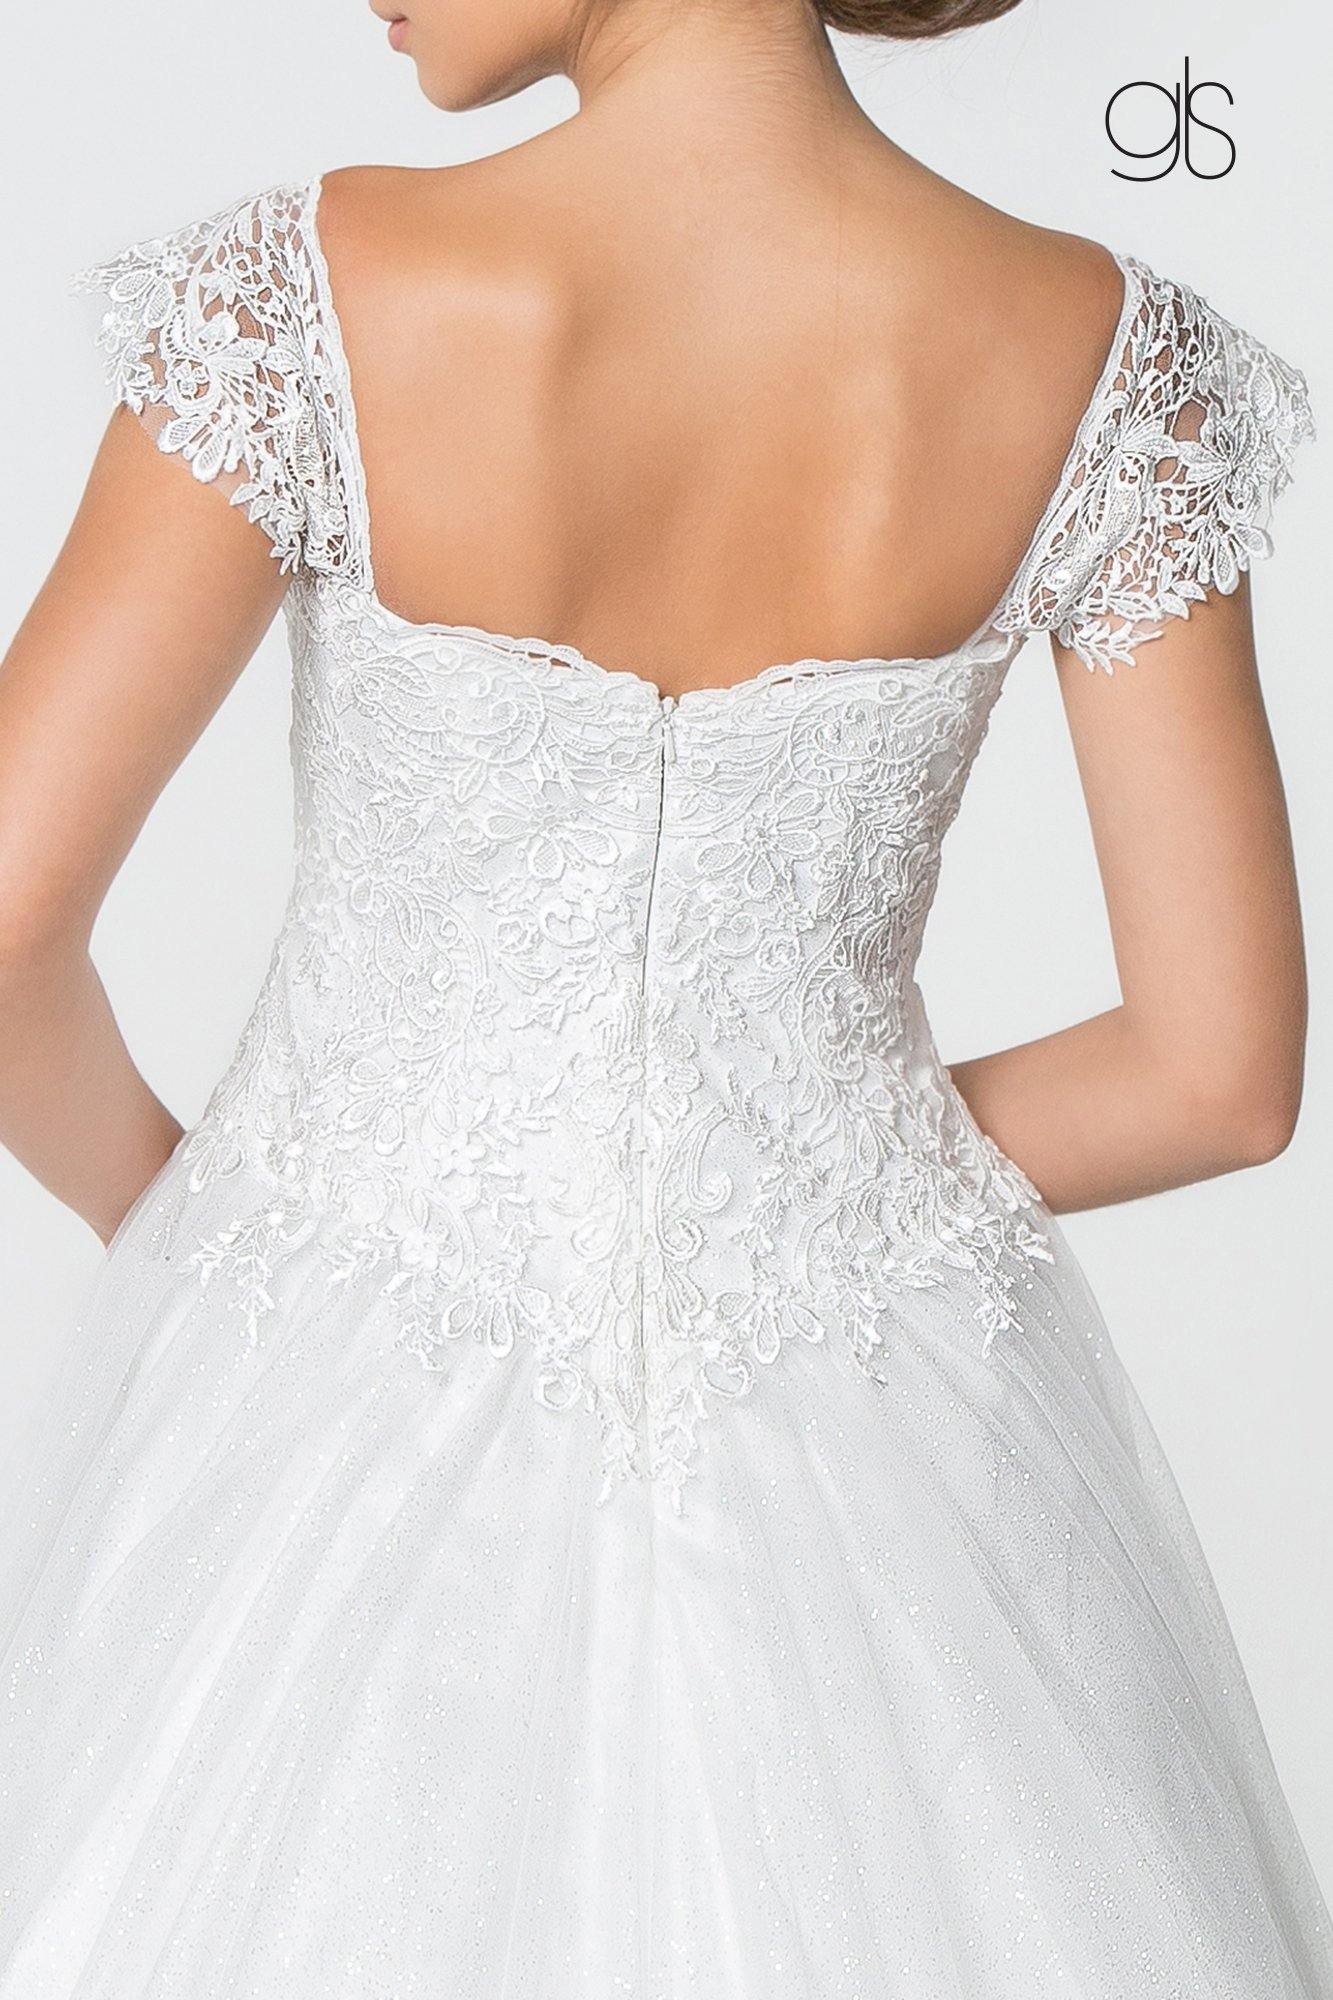 Jewel and Lace Embellished Glitter Mesh Long Wedding Gown - The Dress Outlet Elizabeth K